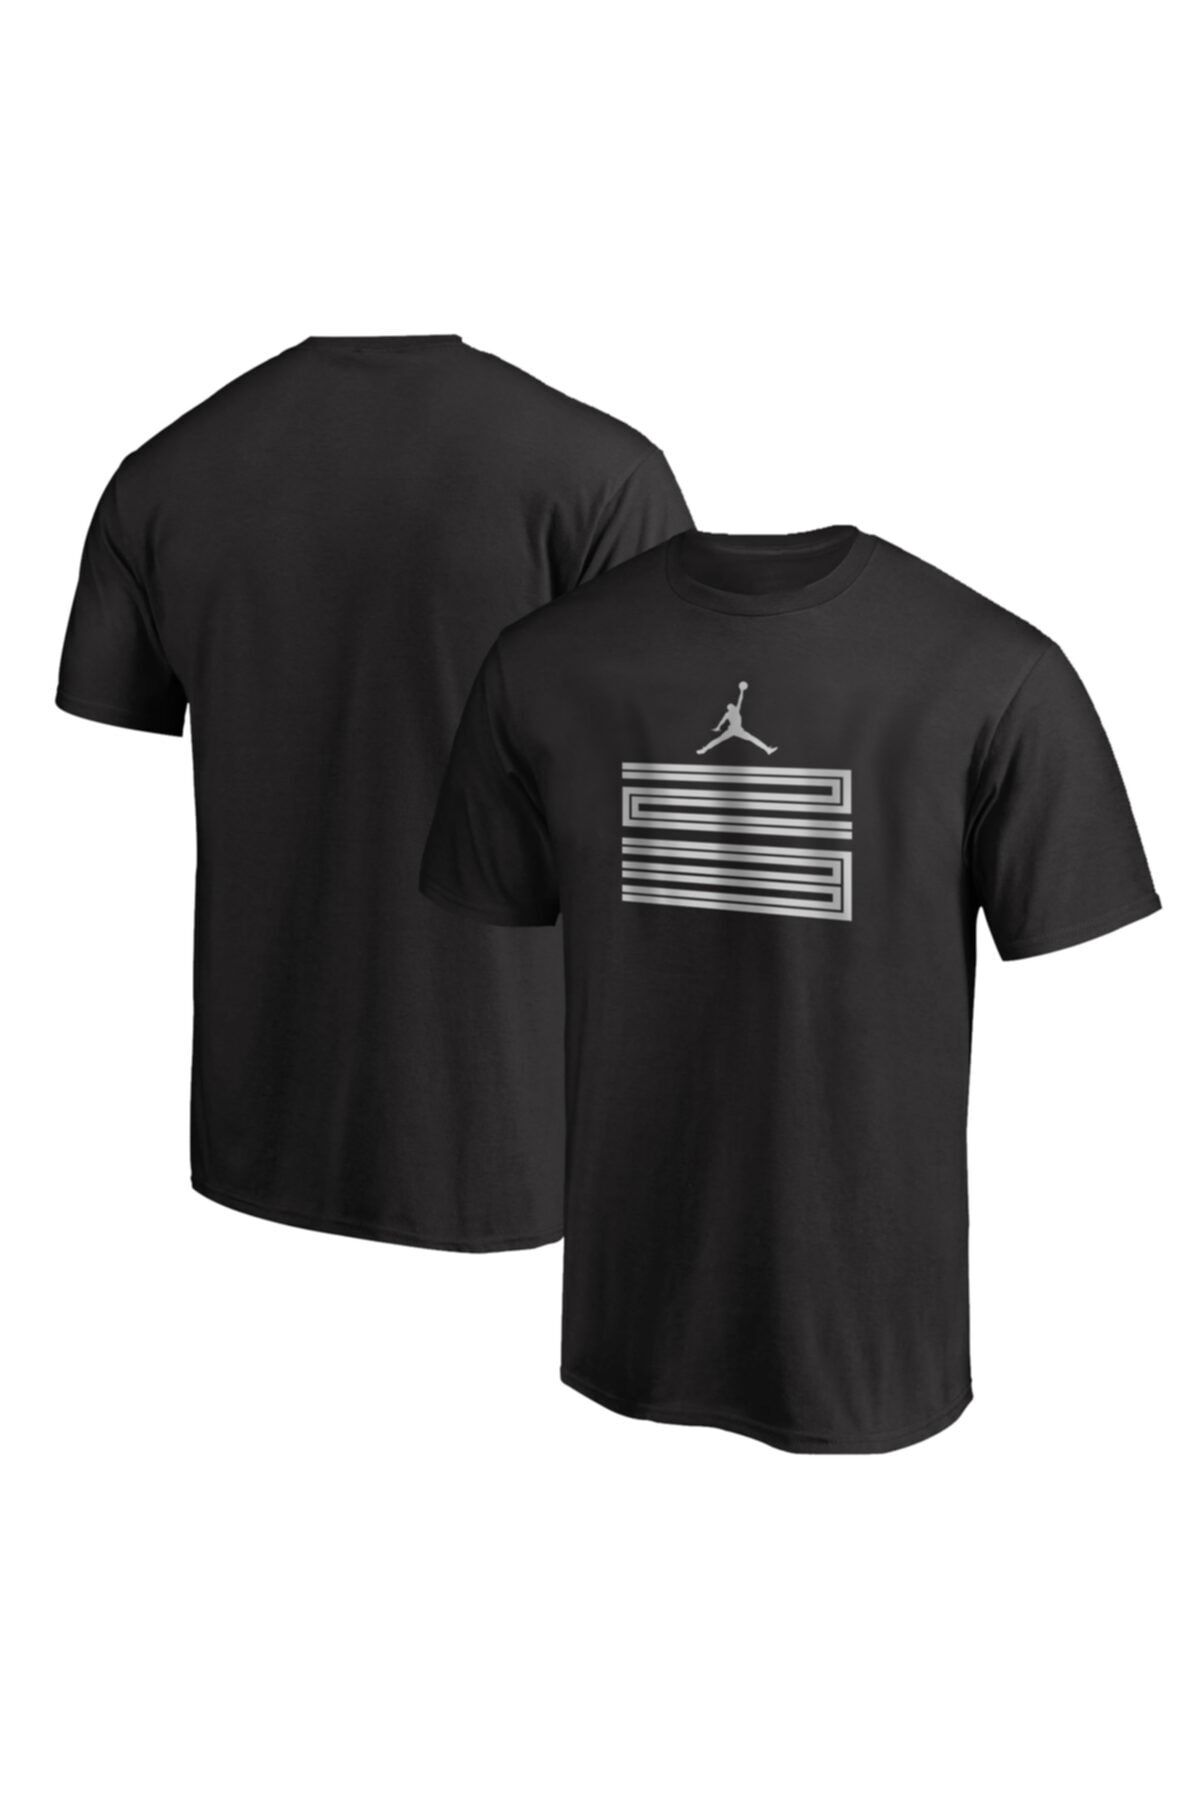 Usateamfans Michael Jordan Tshirt